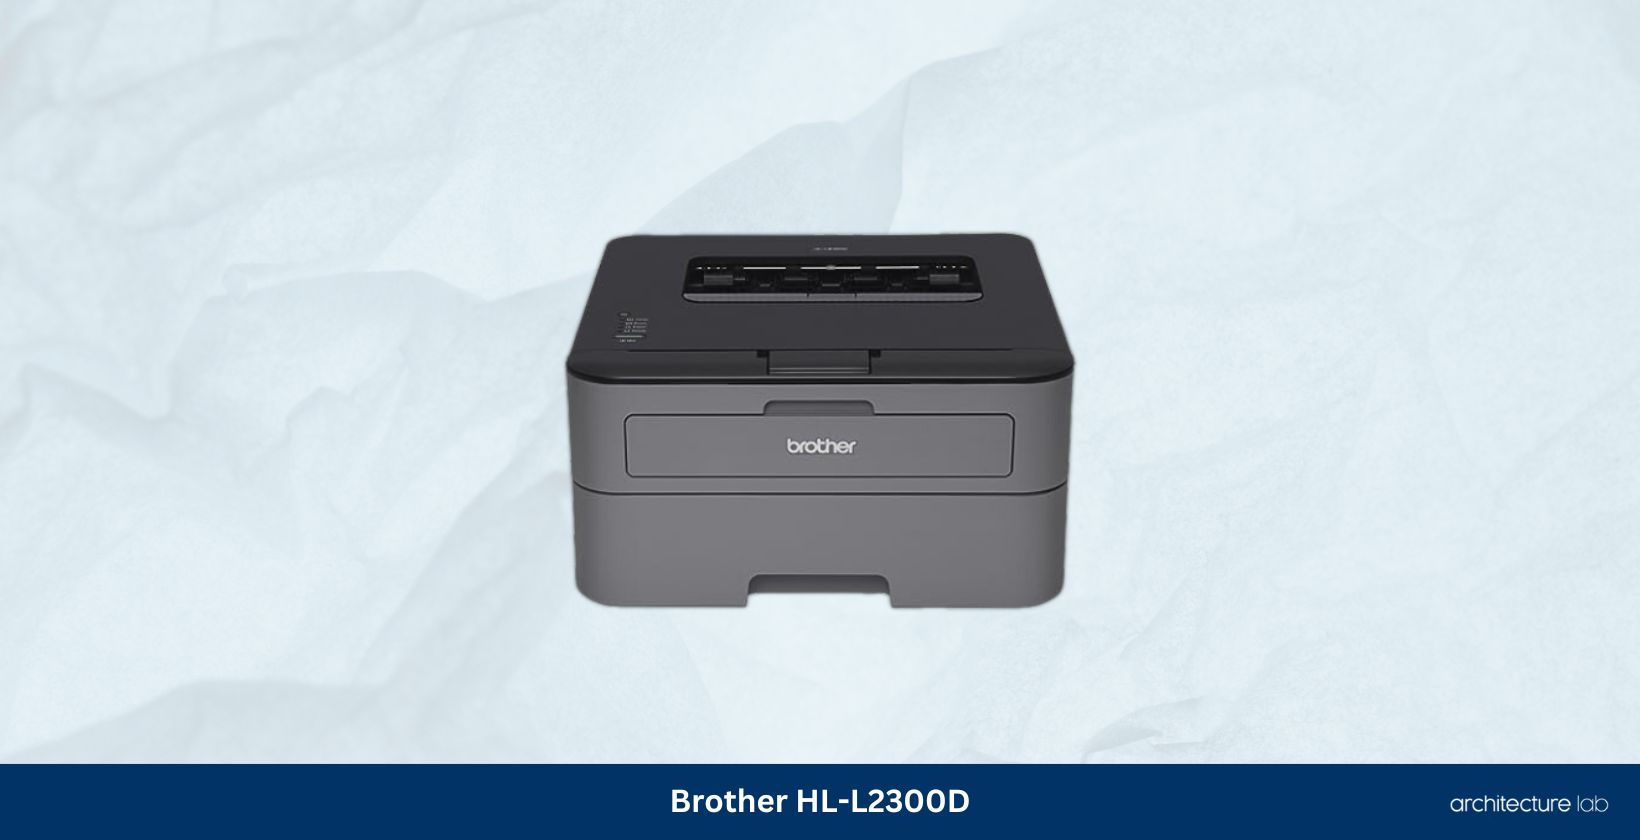 Brother hl l2300d monochrome laser printer with duplex printing